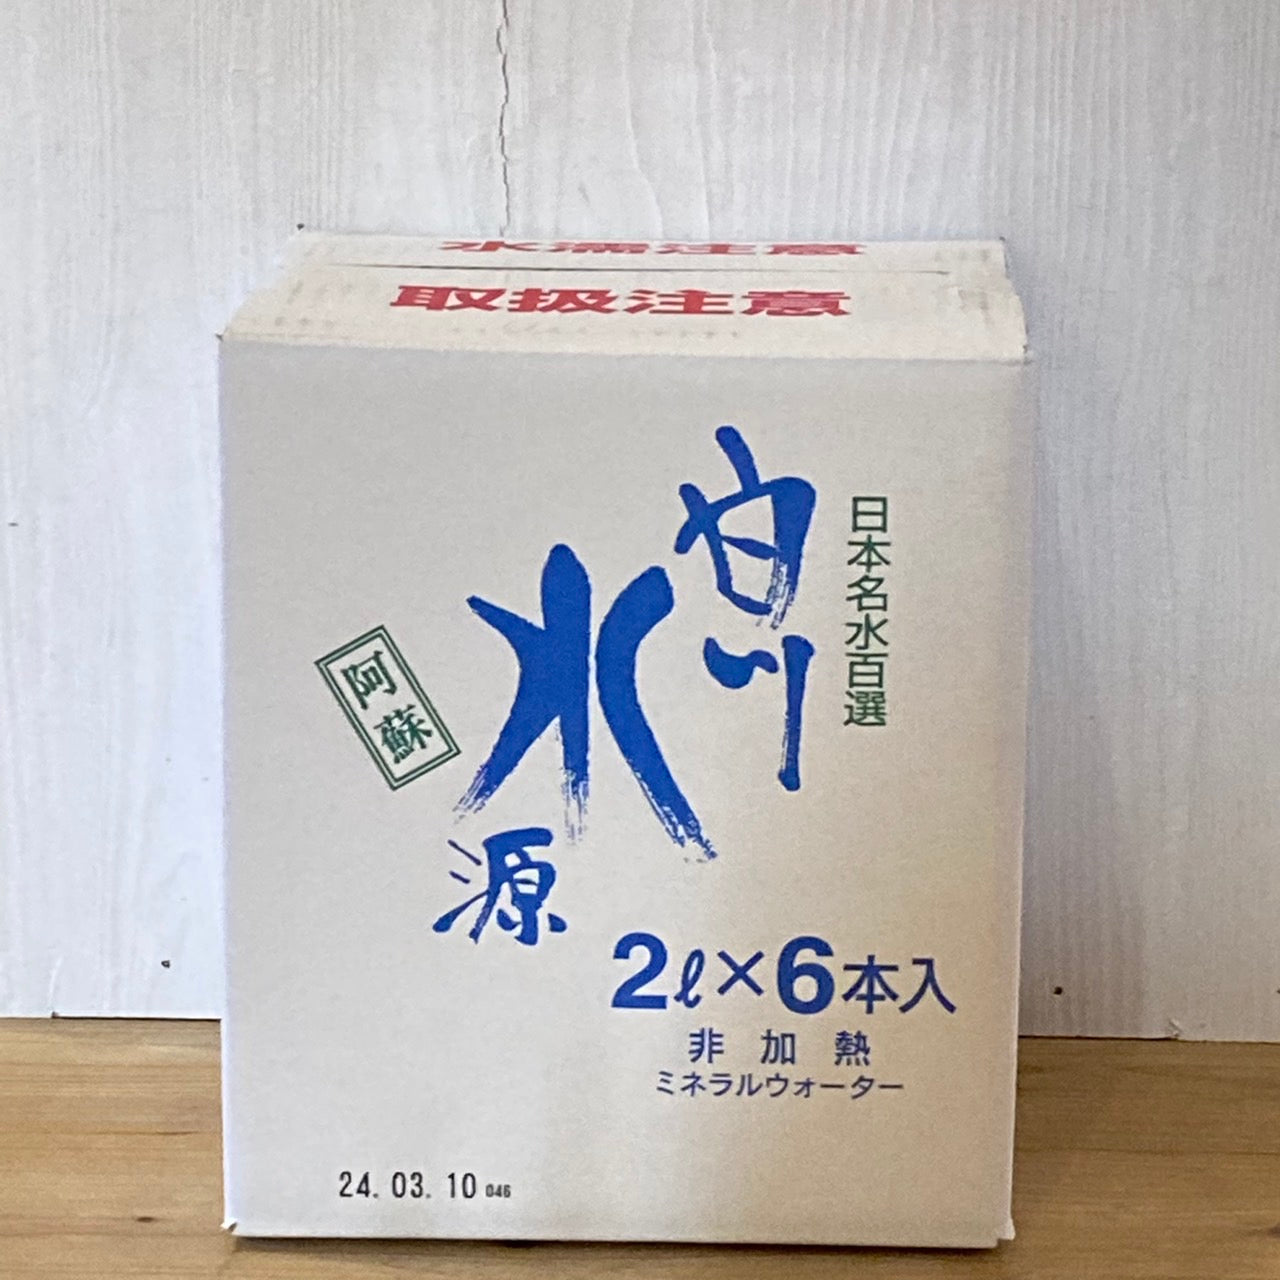 Shirakawa Water Source Mineral Water 6 bottles (1 case)